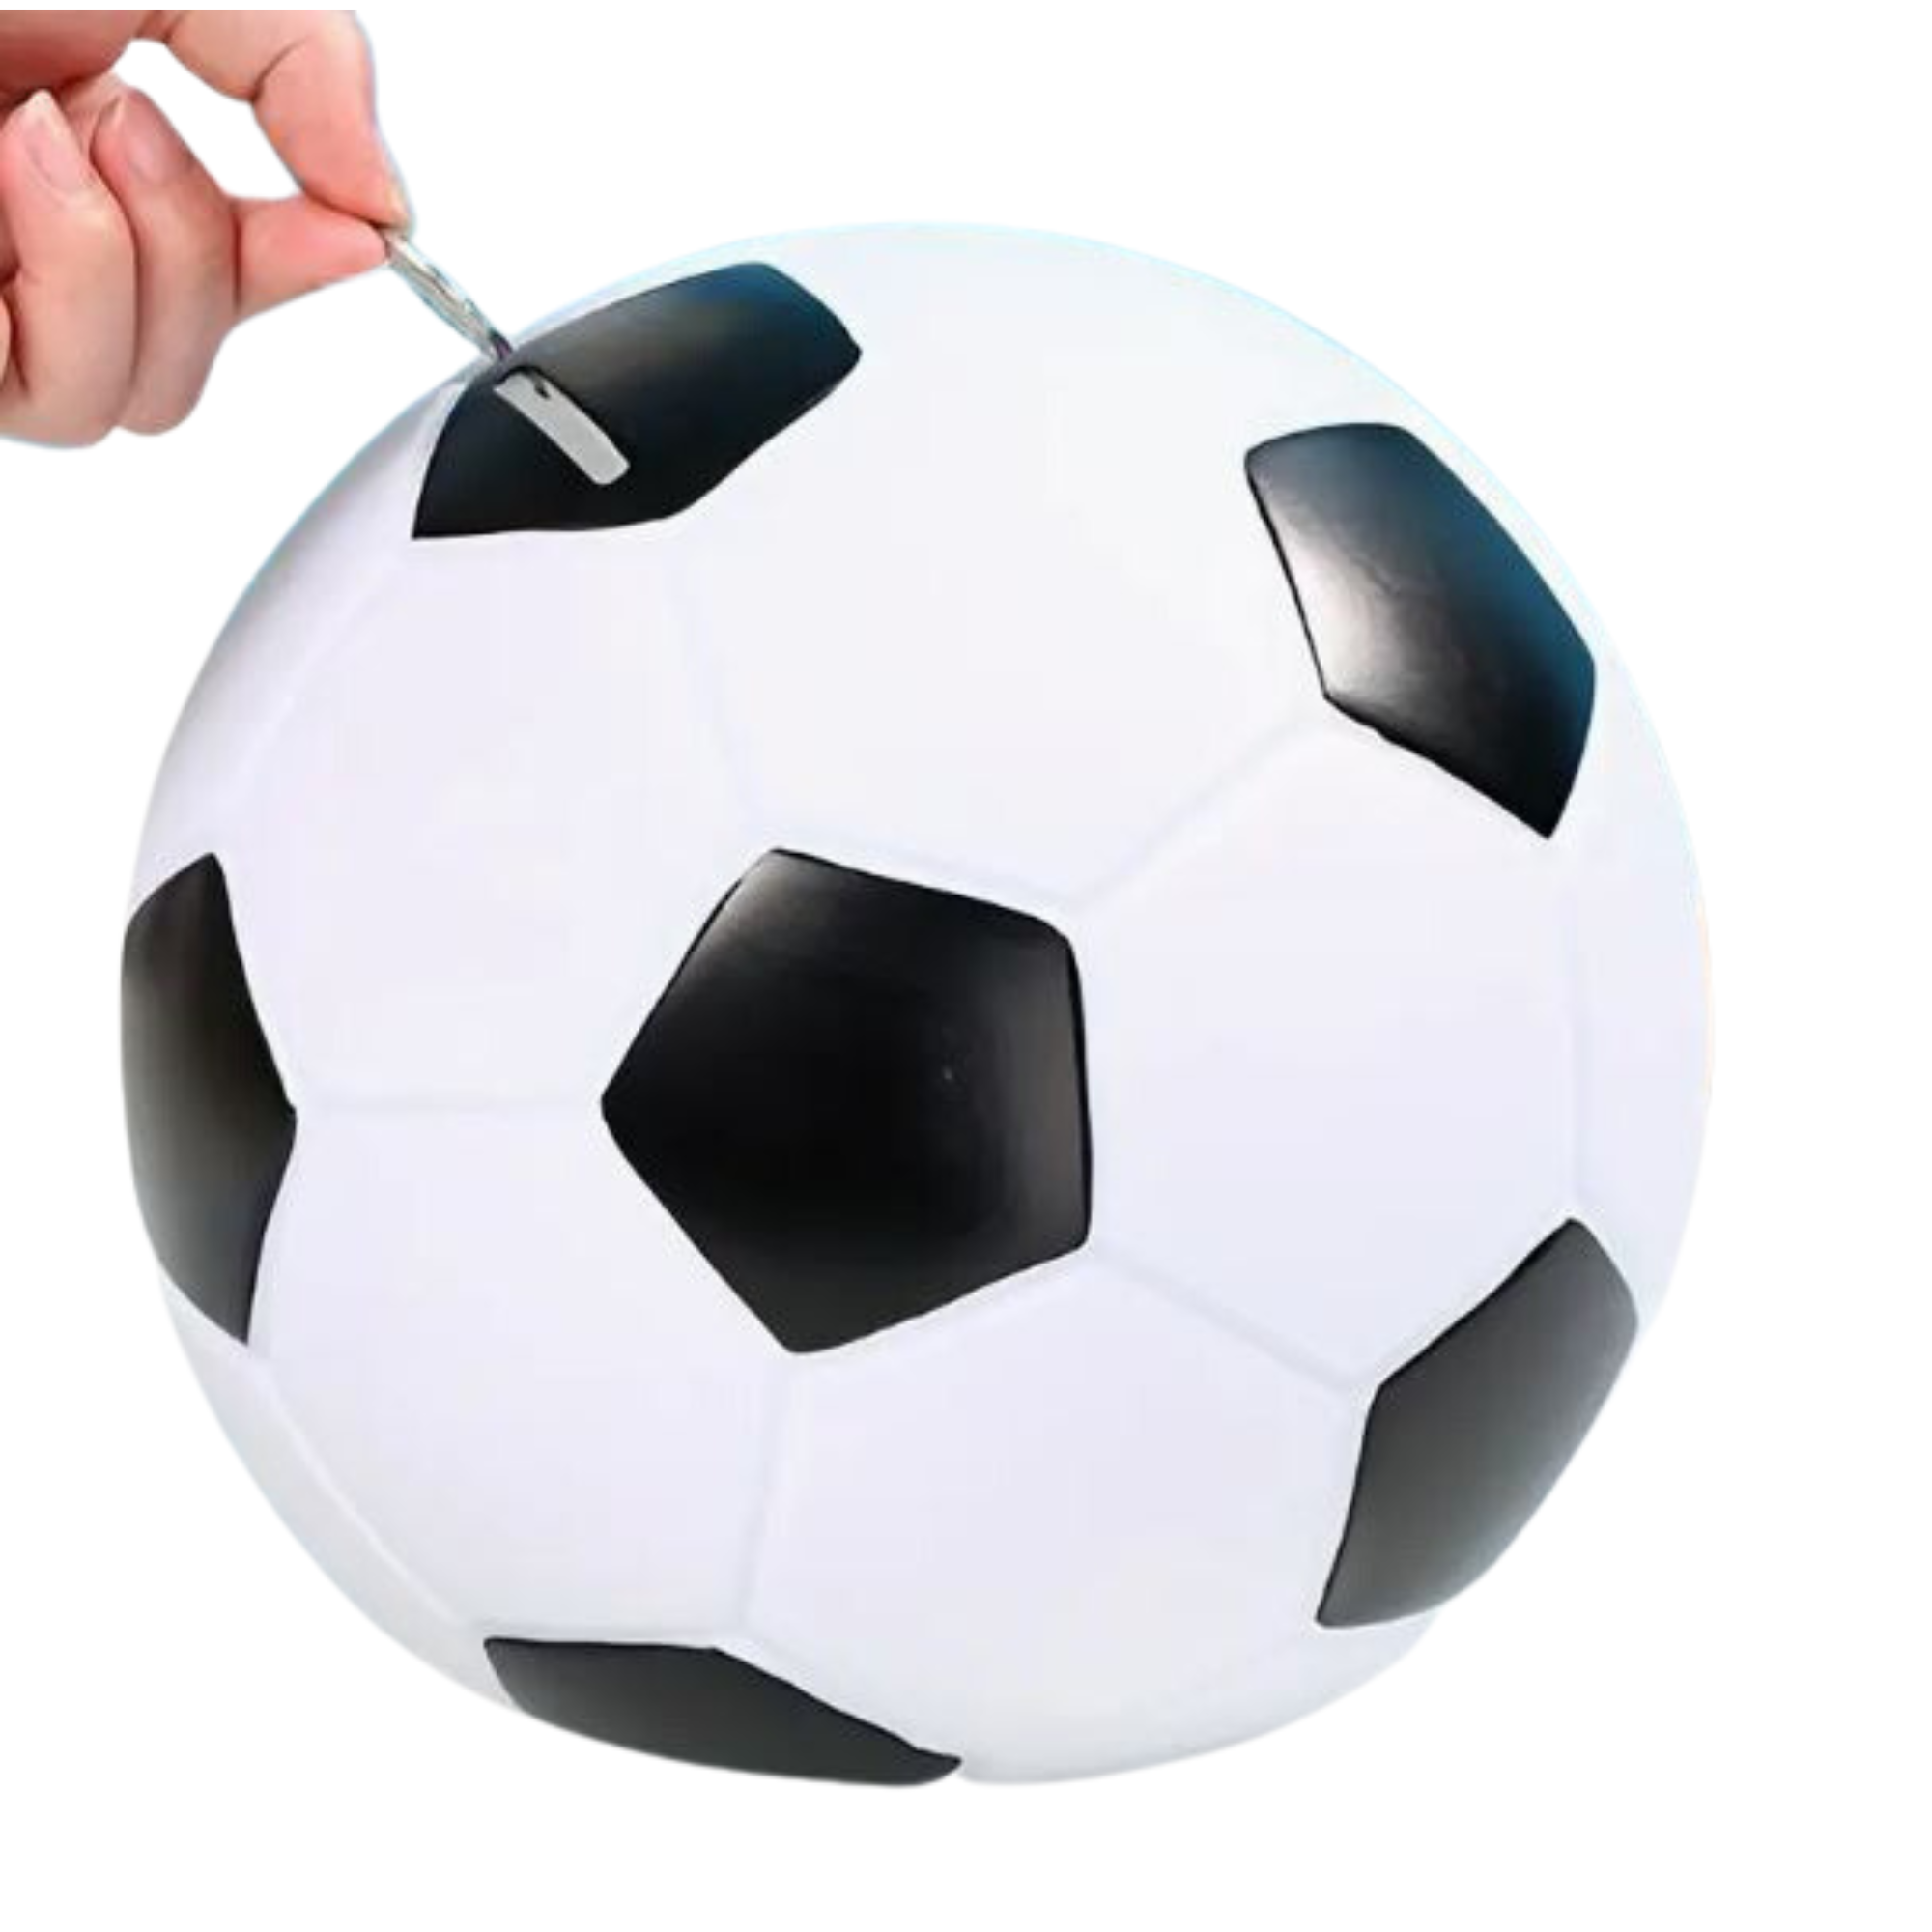 Soccer Ball Money Box - Personalised Gift